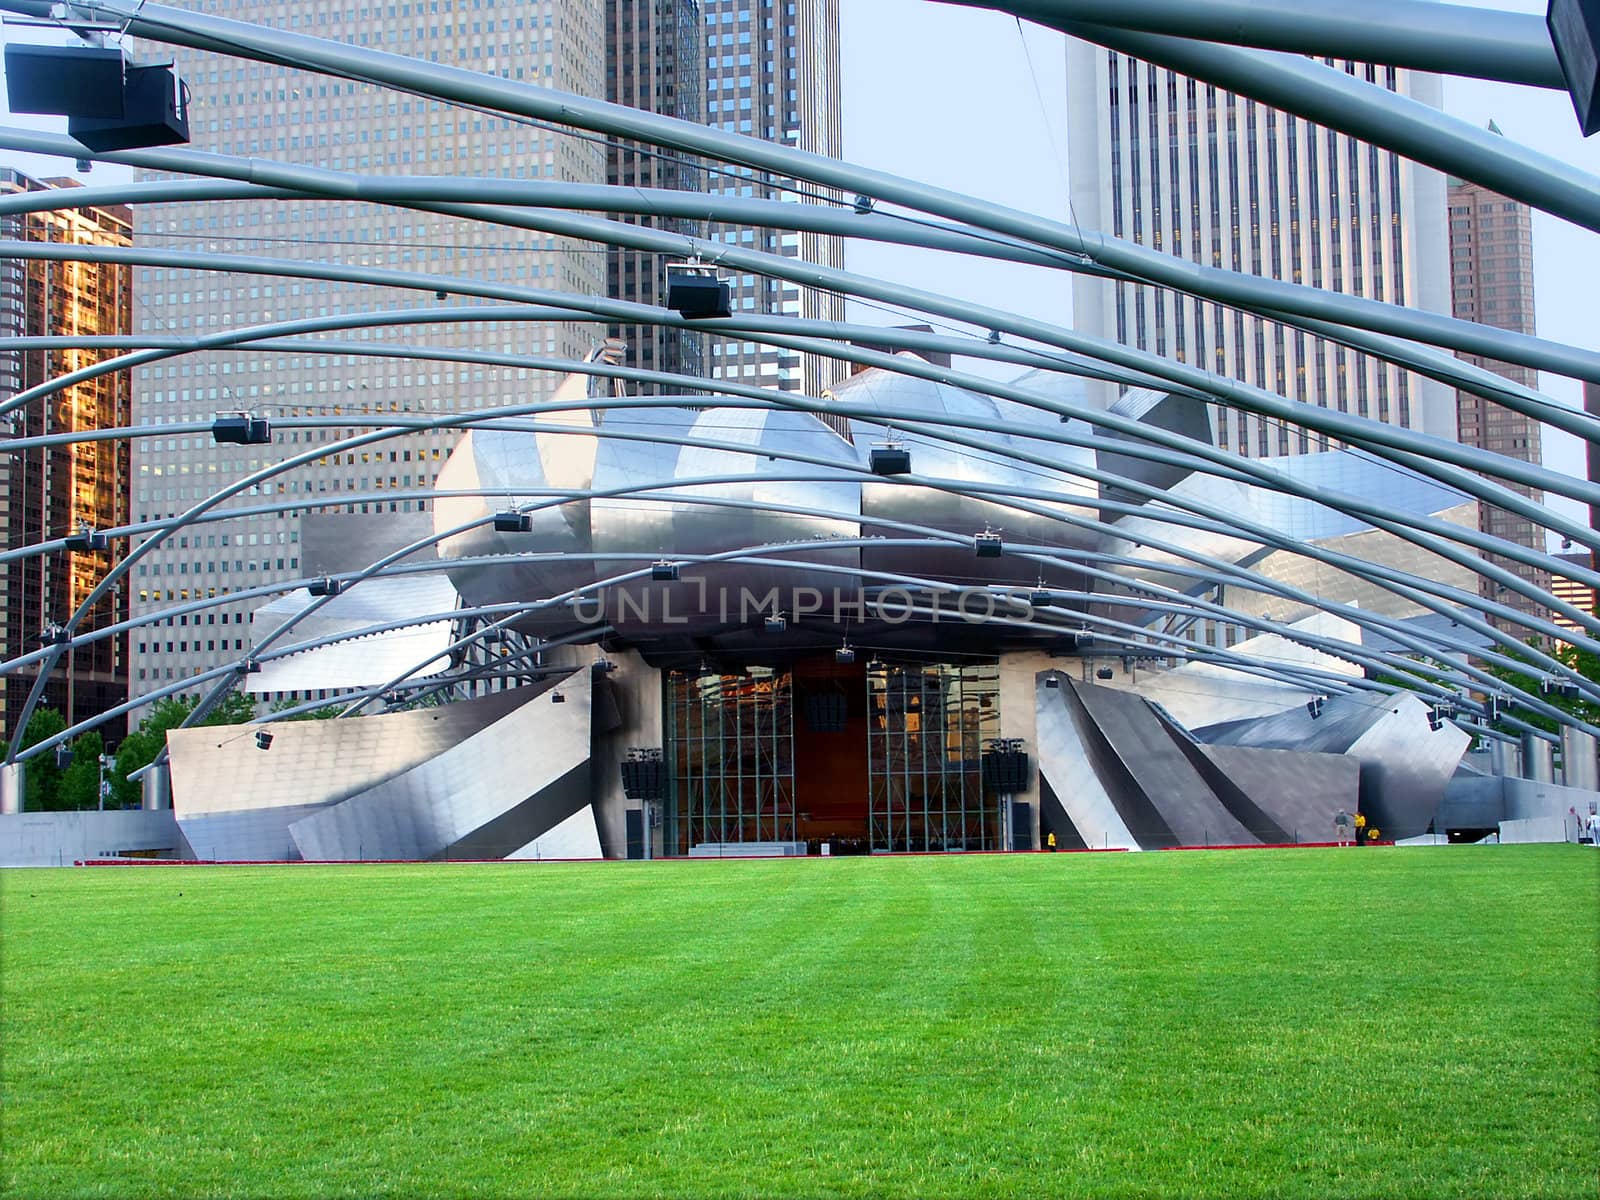 Millennium Park Chicago Illinois by Wirepec